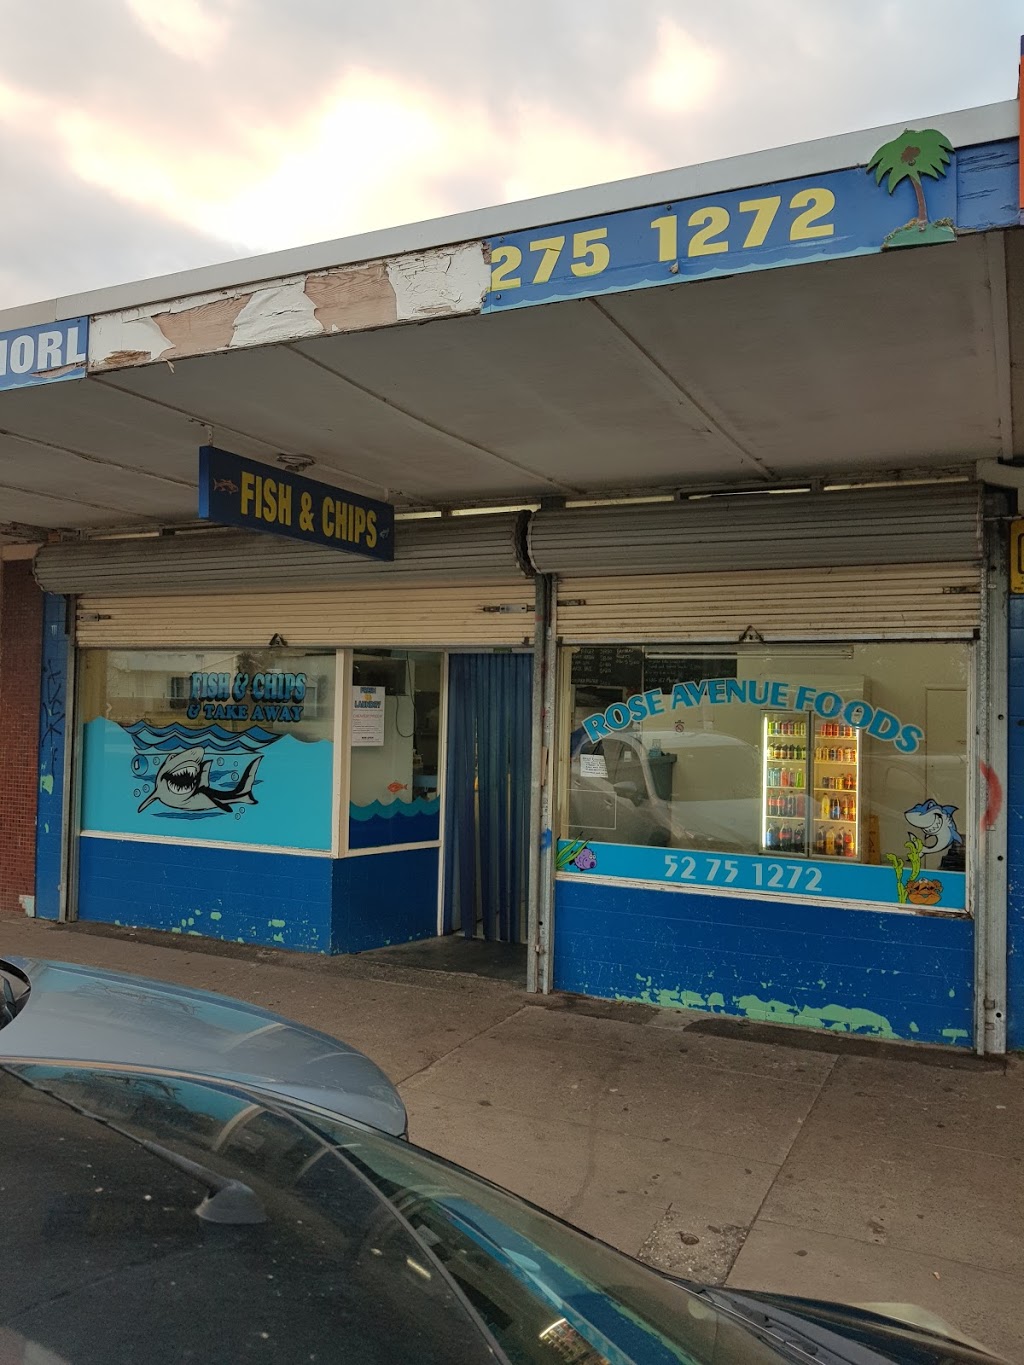 Rose Ave Fish & Chip Shop | 28 Rose Ave, Norlane VIC 3214, Australia | Phone: (03) 5275 1272